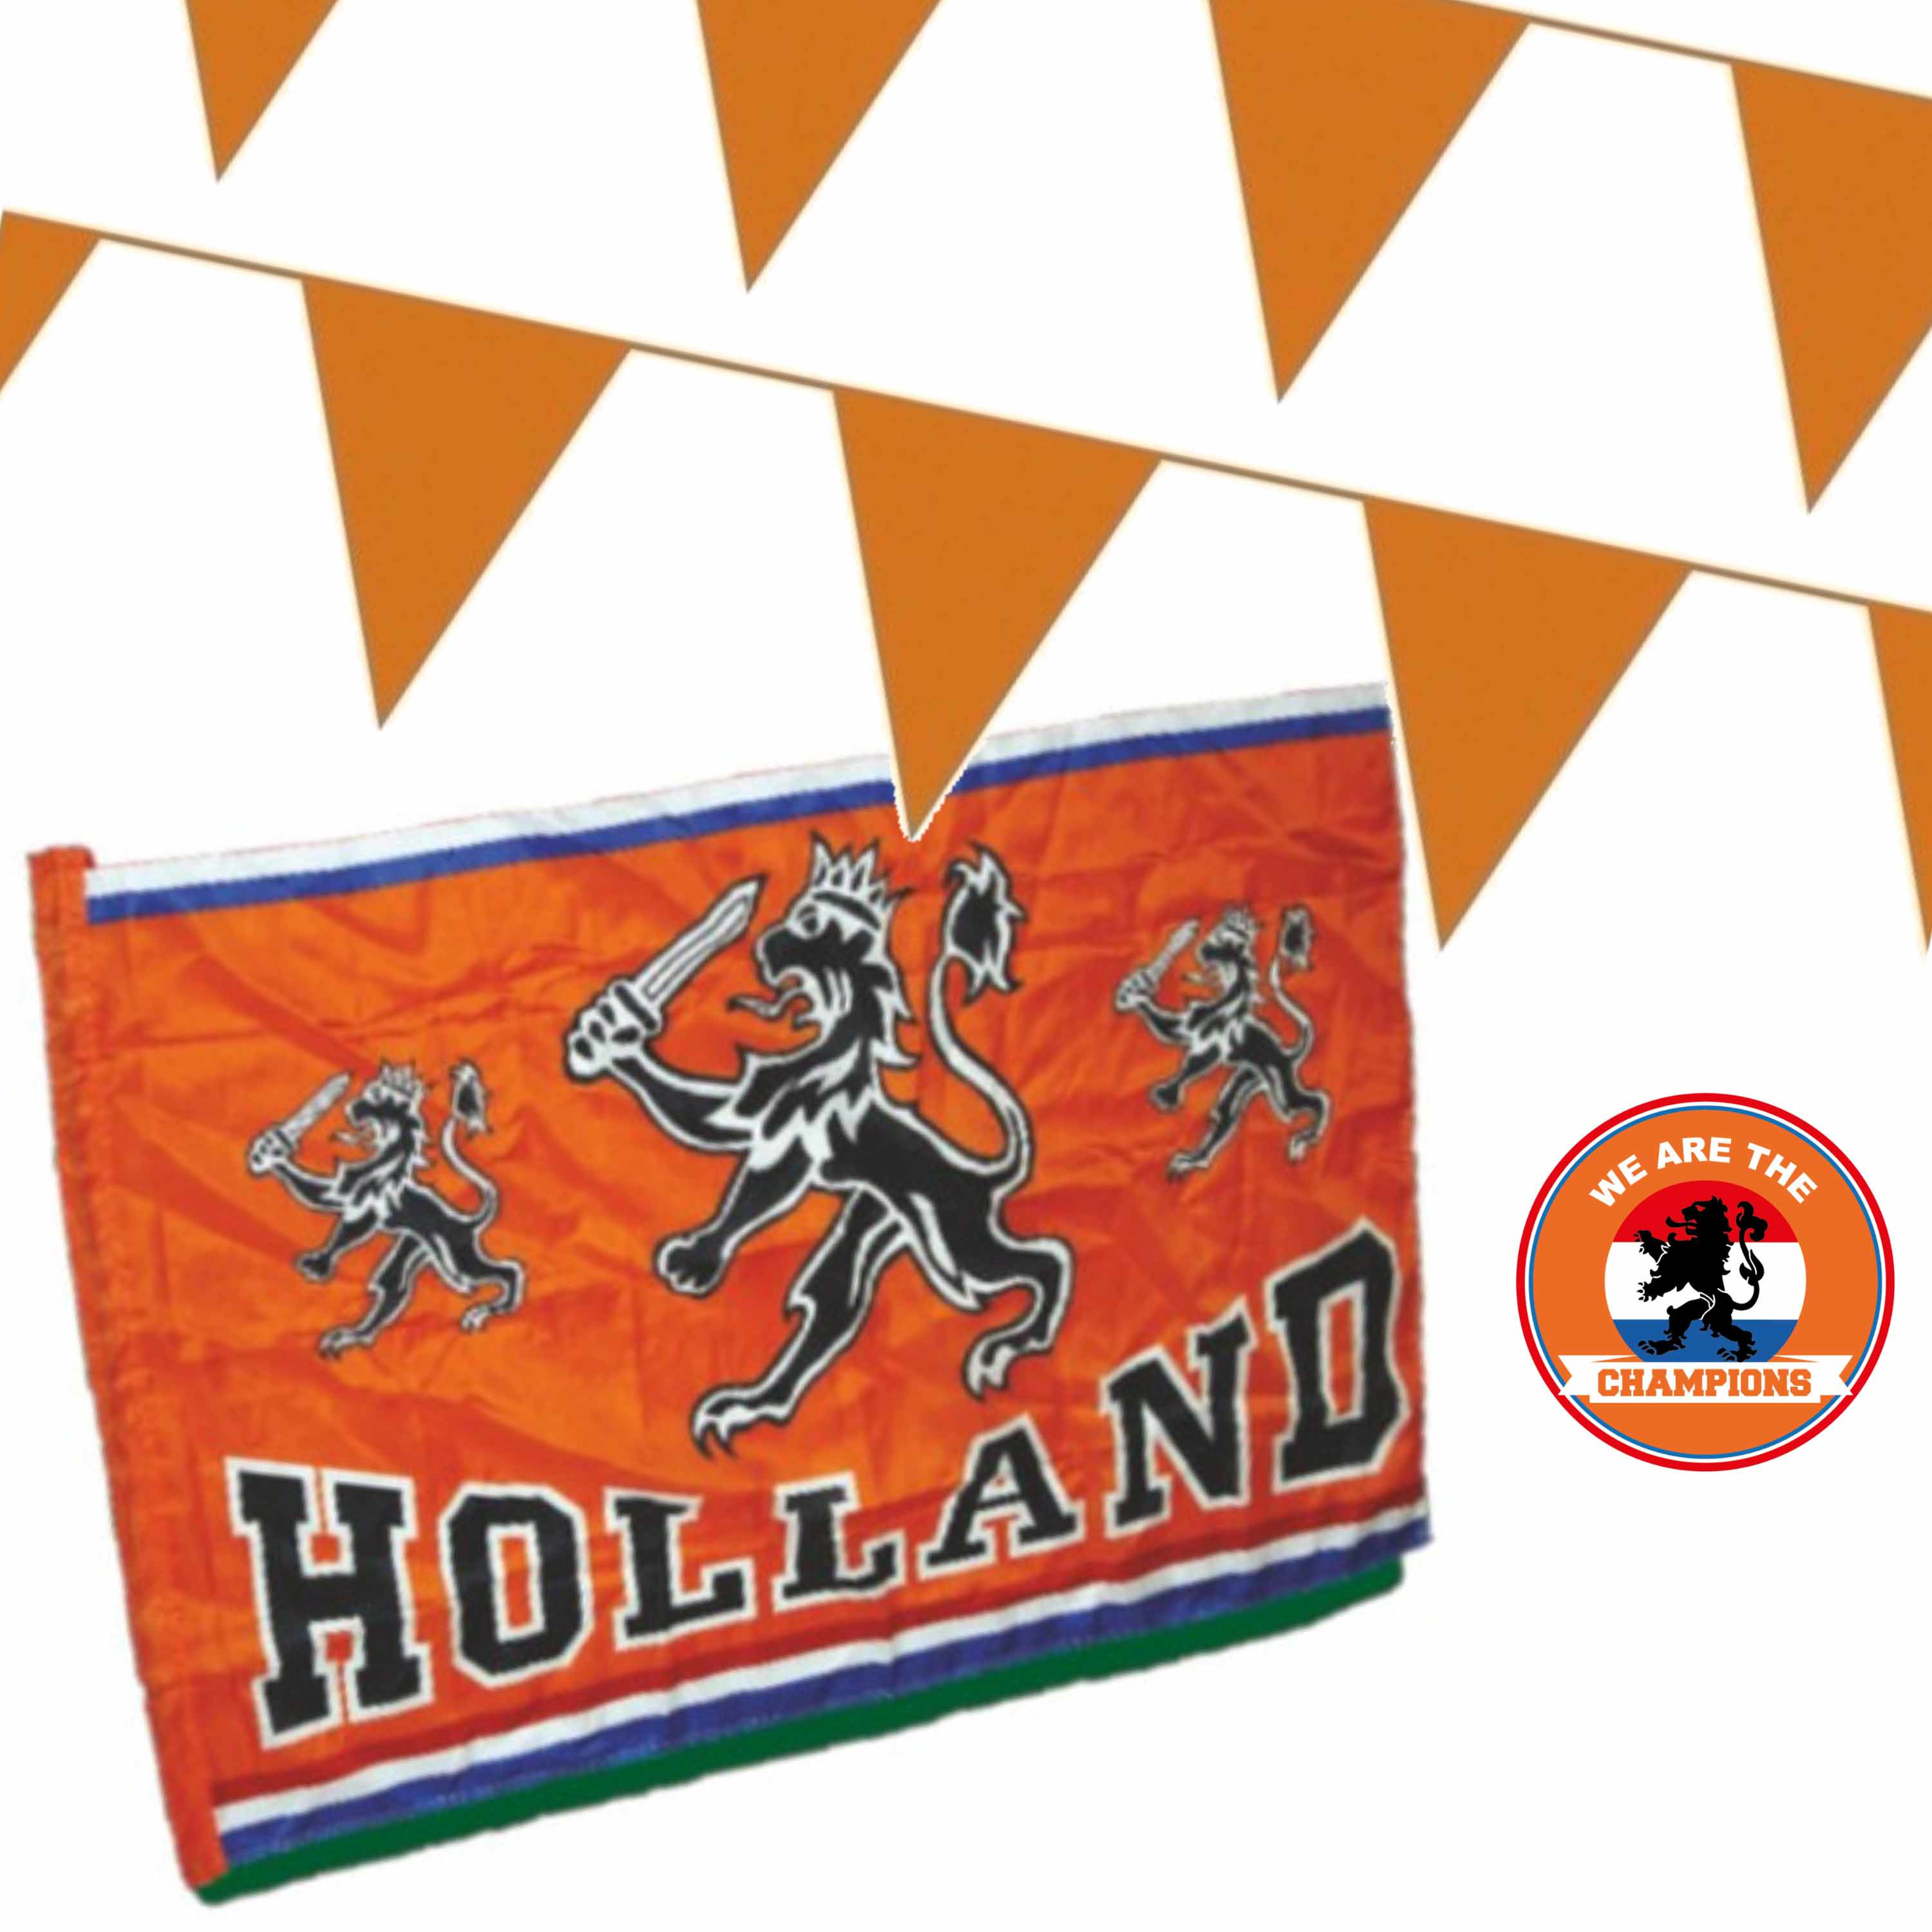 Ek oranje straat huis versiering pakket met oa 1x Holland spandoek, 200 meter oranje vlaggenlijnen